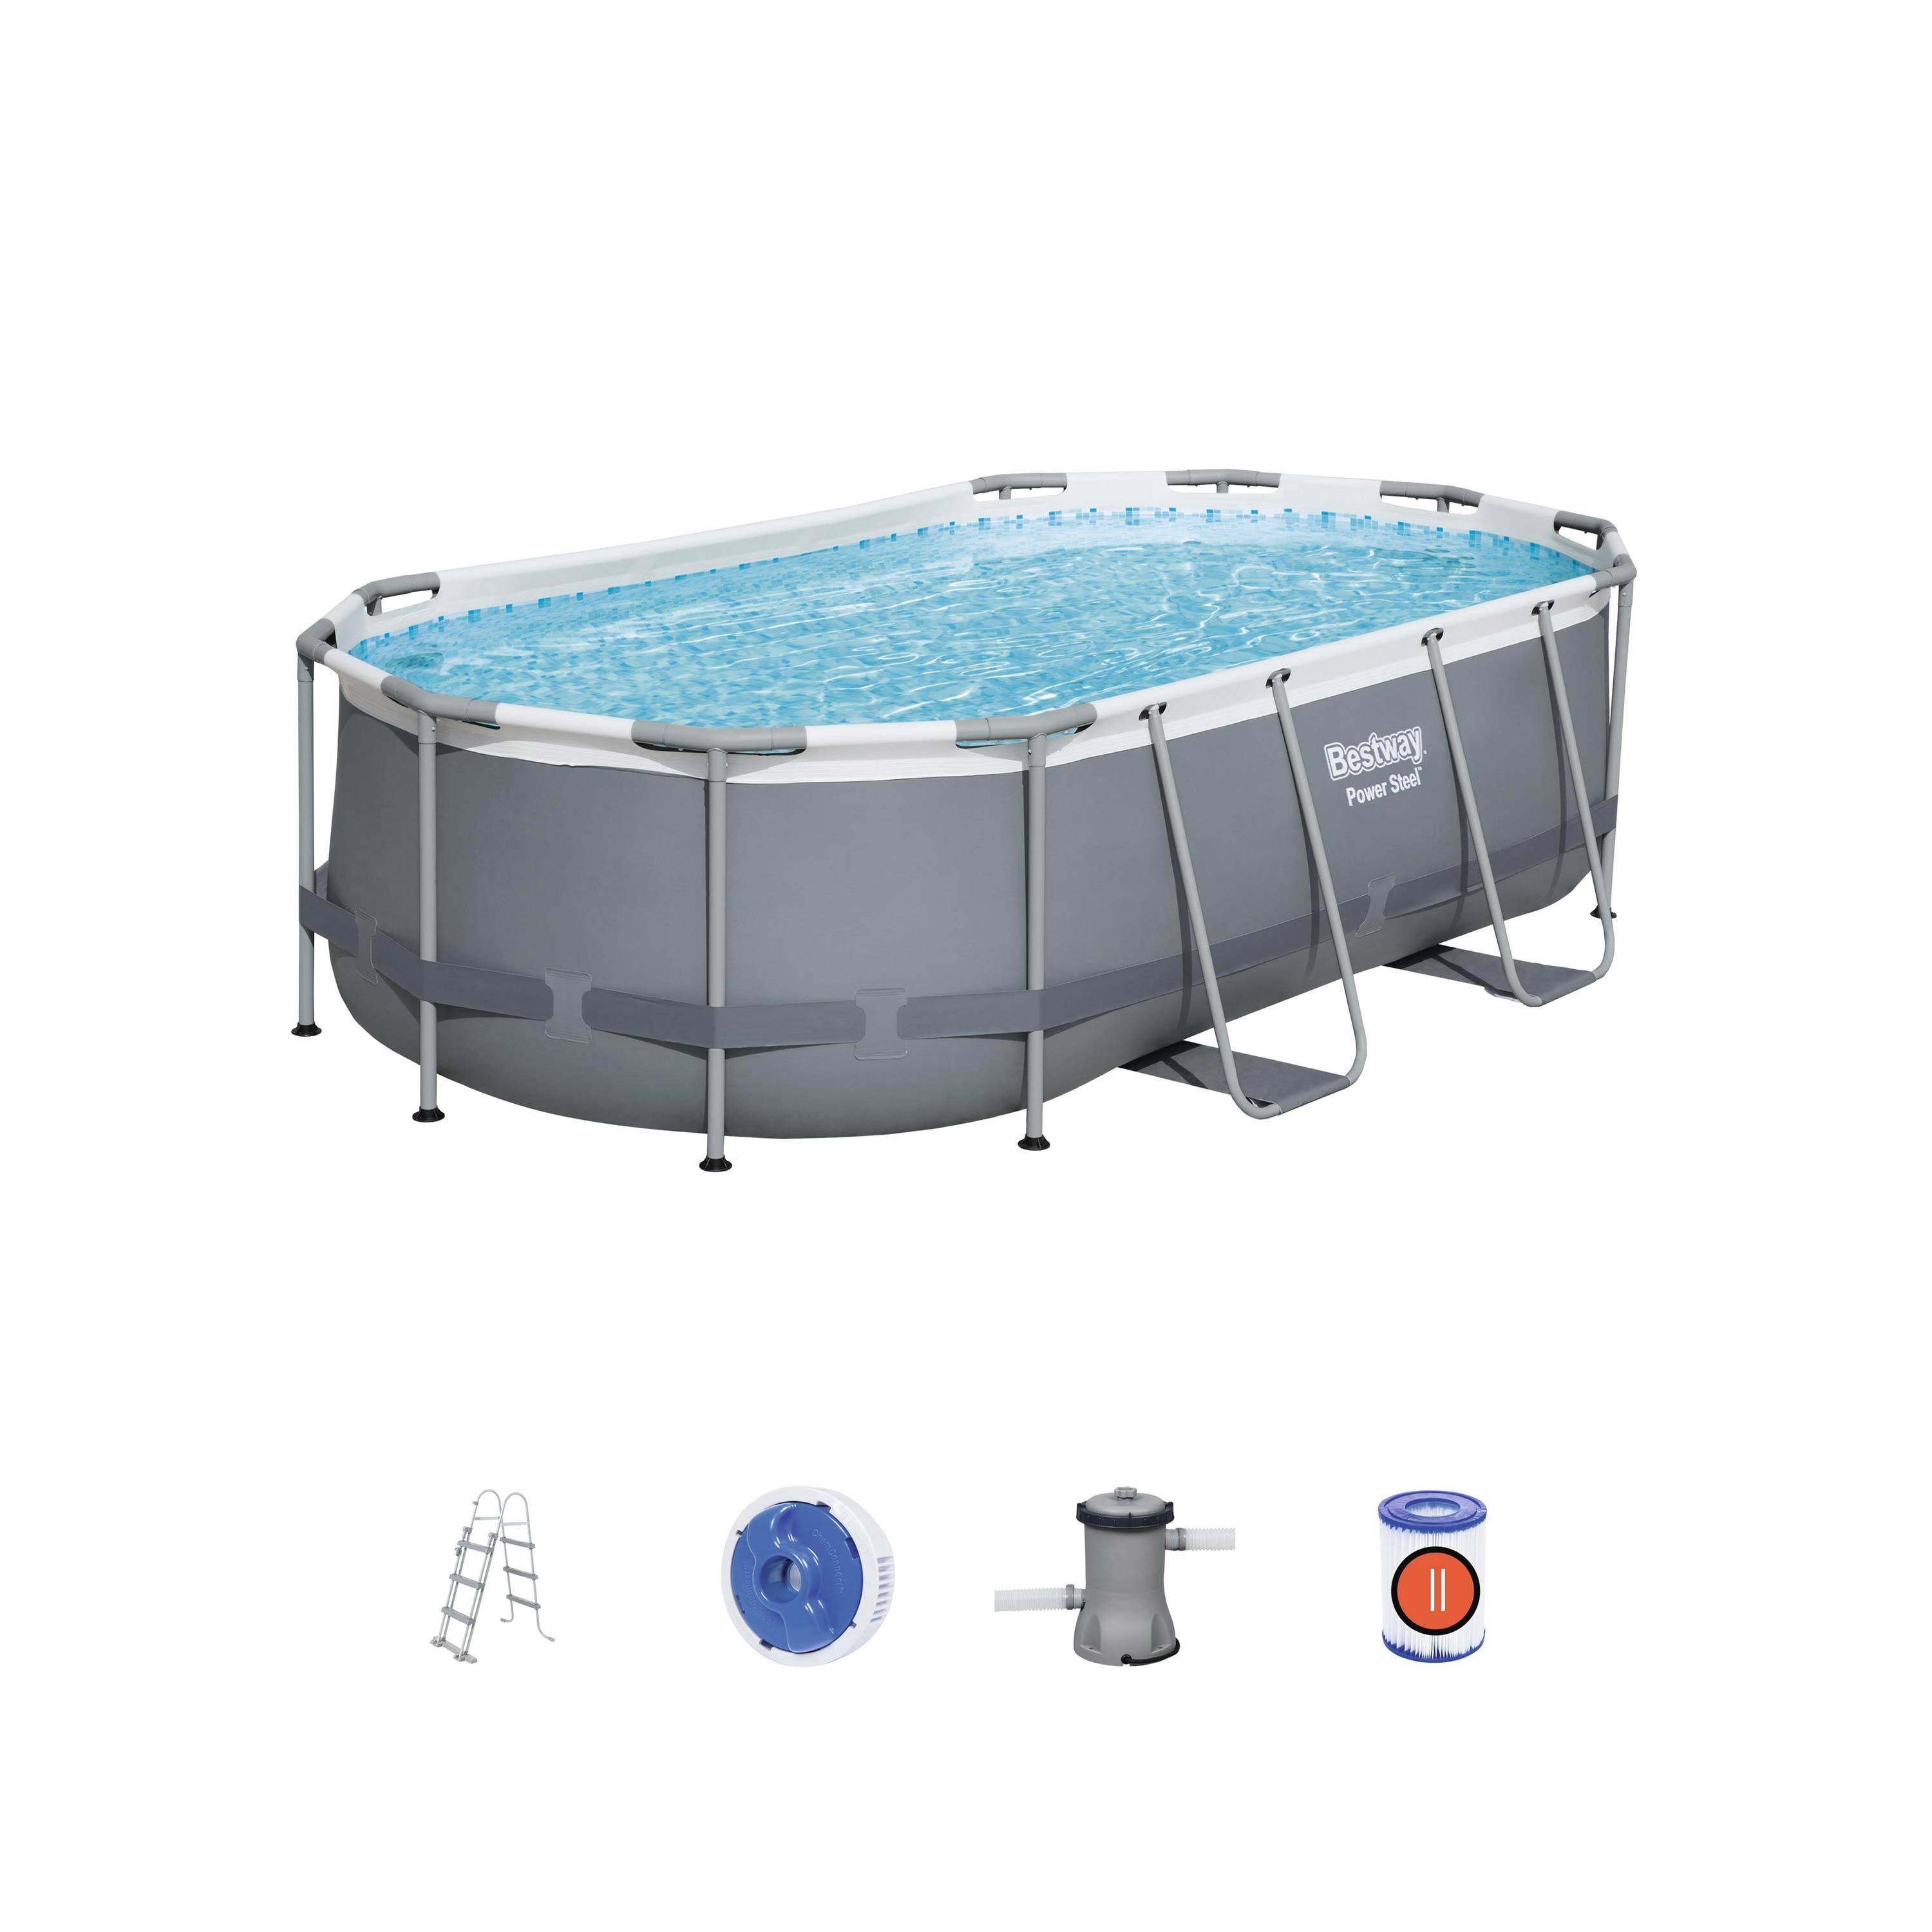 Compleet BESTWAY zwembad – Spinelle grijs – Ovaal frame zwembad 4x2 m, inclusief filterpomp, 3-trapsladder en vlotter,sweeek,Photo1